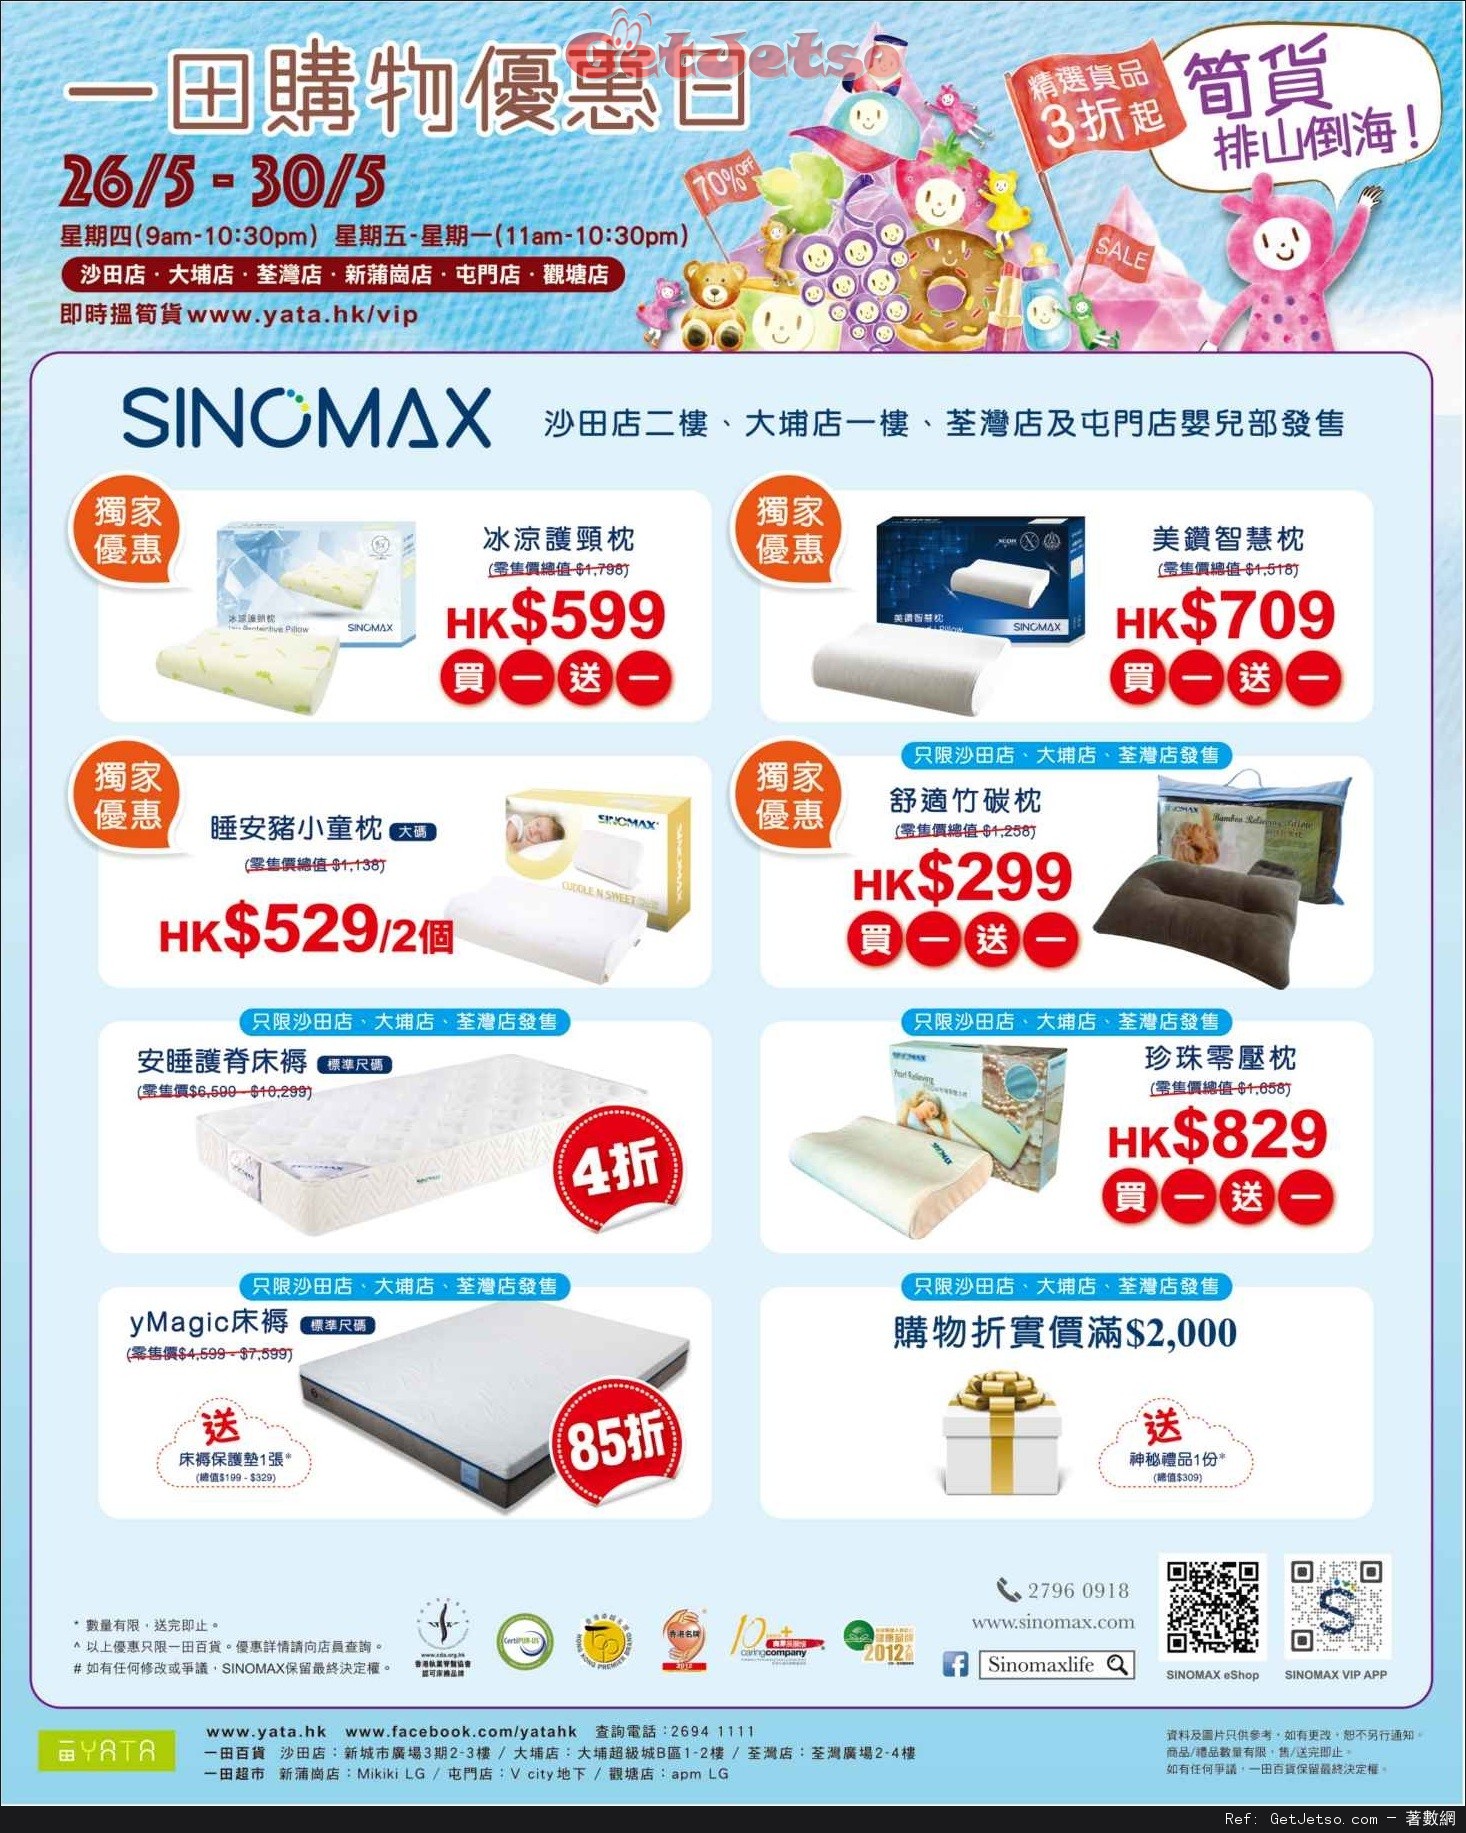 SINOMAX 優惠情報@一田百貨購物優惠日(至16年5月30日)圖片1